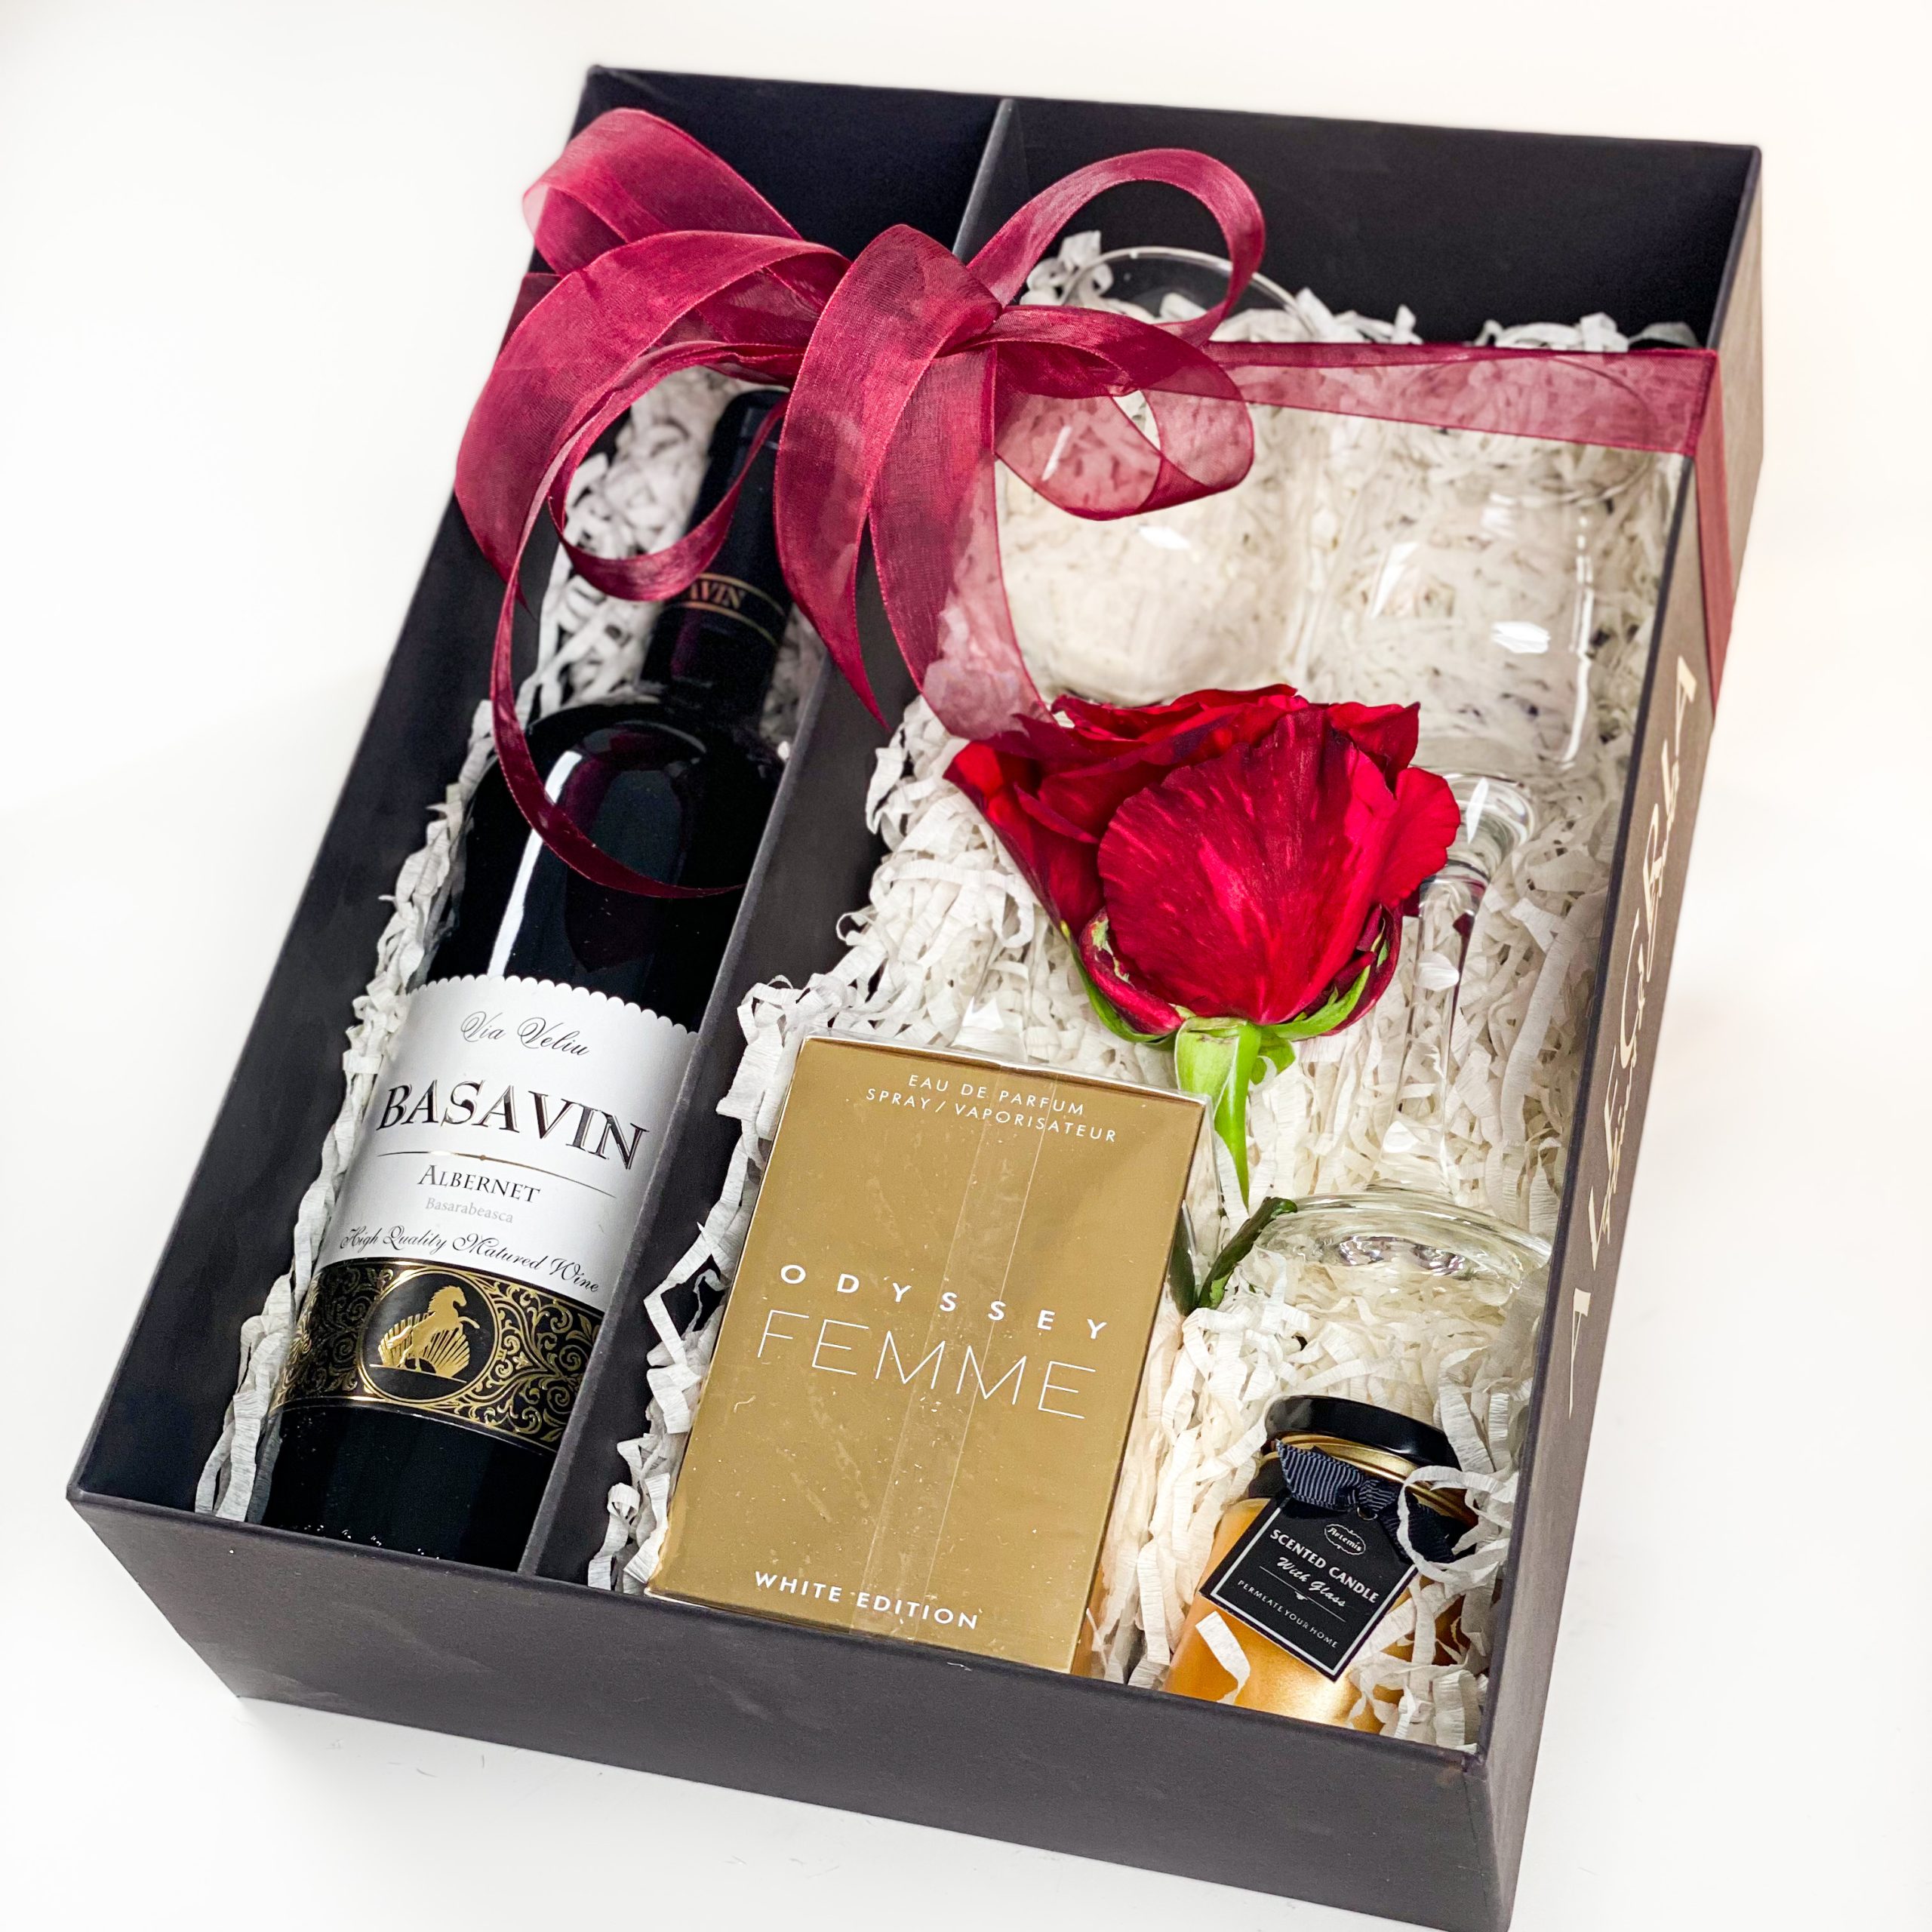 Cutie cadou Pentru Ea VDay flori naturale parfum Odyssey Femme 100 ml Vin Basavin rosu sec Albernet 1 scaled